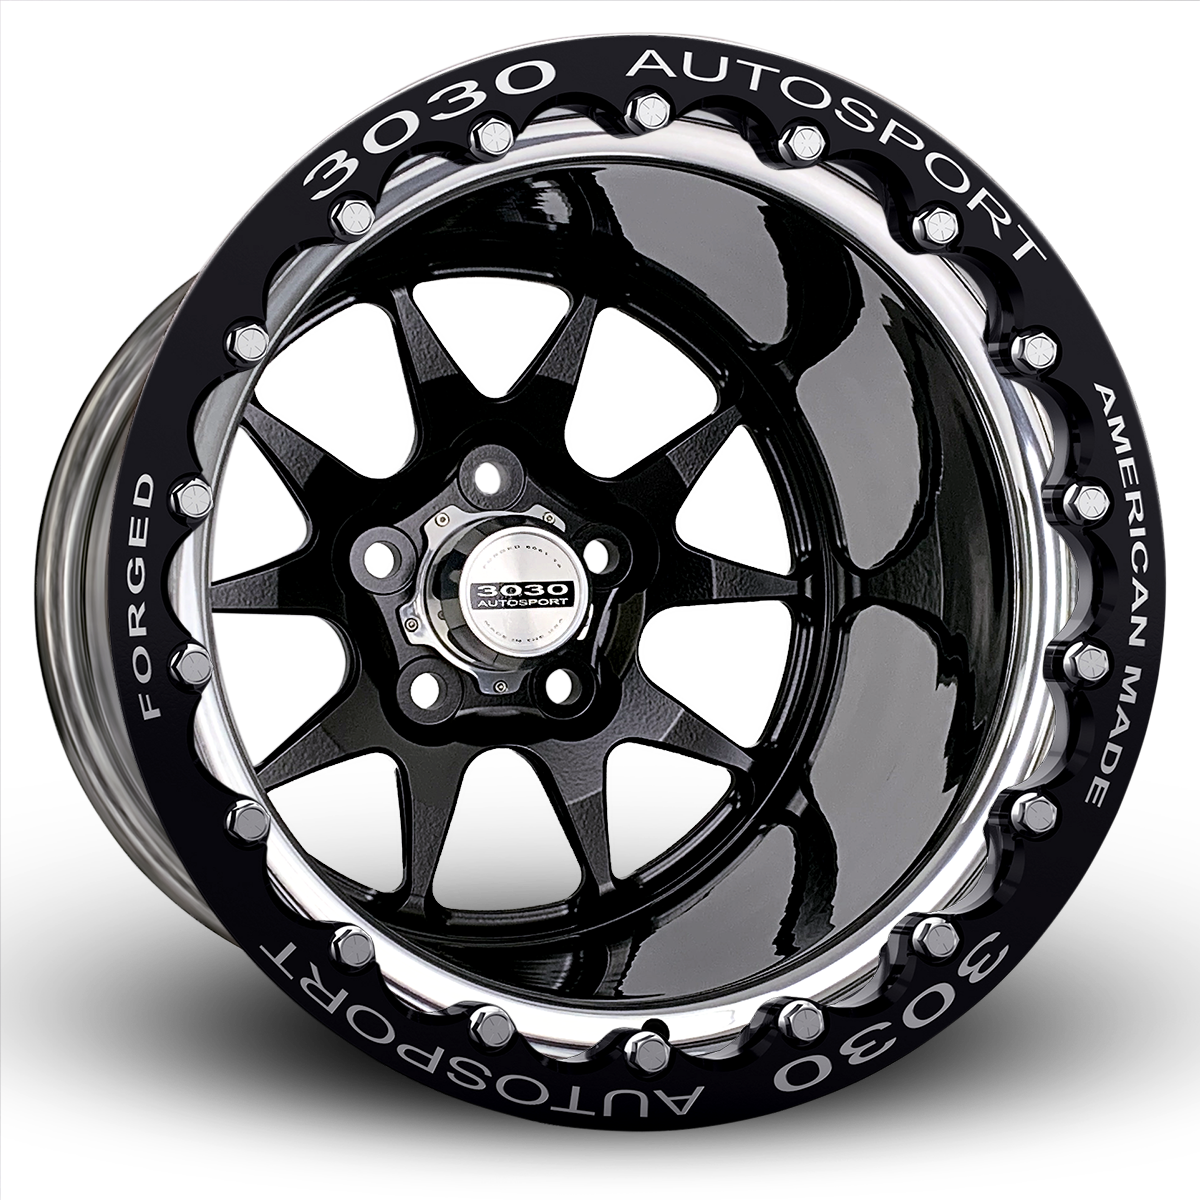 MACH-10 Double-Beadlock Wheel, Size: 15x9", Bolt Pattern: 5x4.75", Backspace: 4" [Black/Polished]